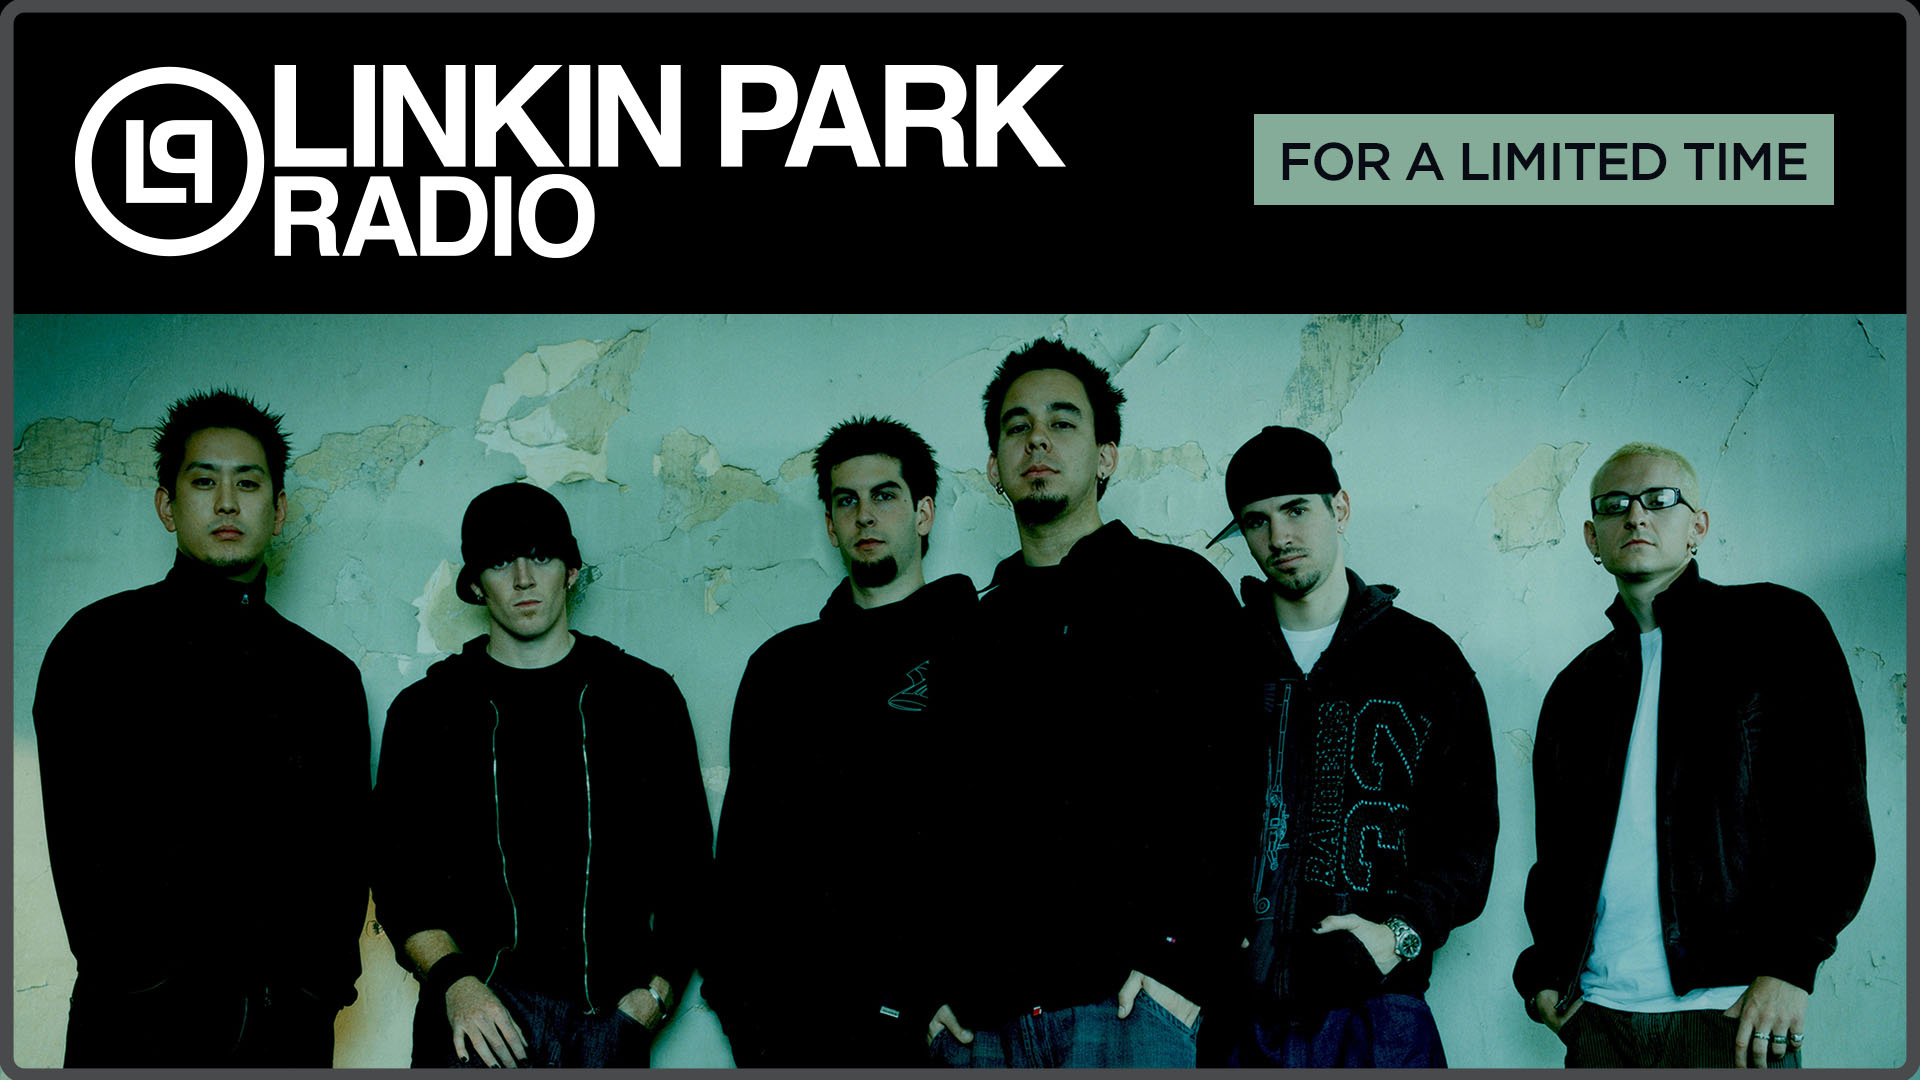 Linkin Park Radio SiriusXM